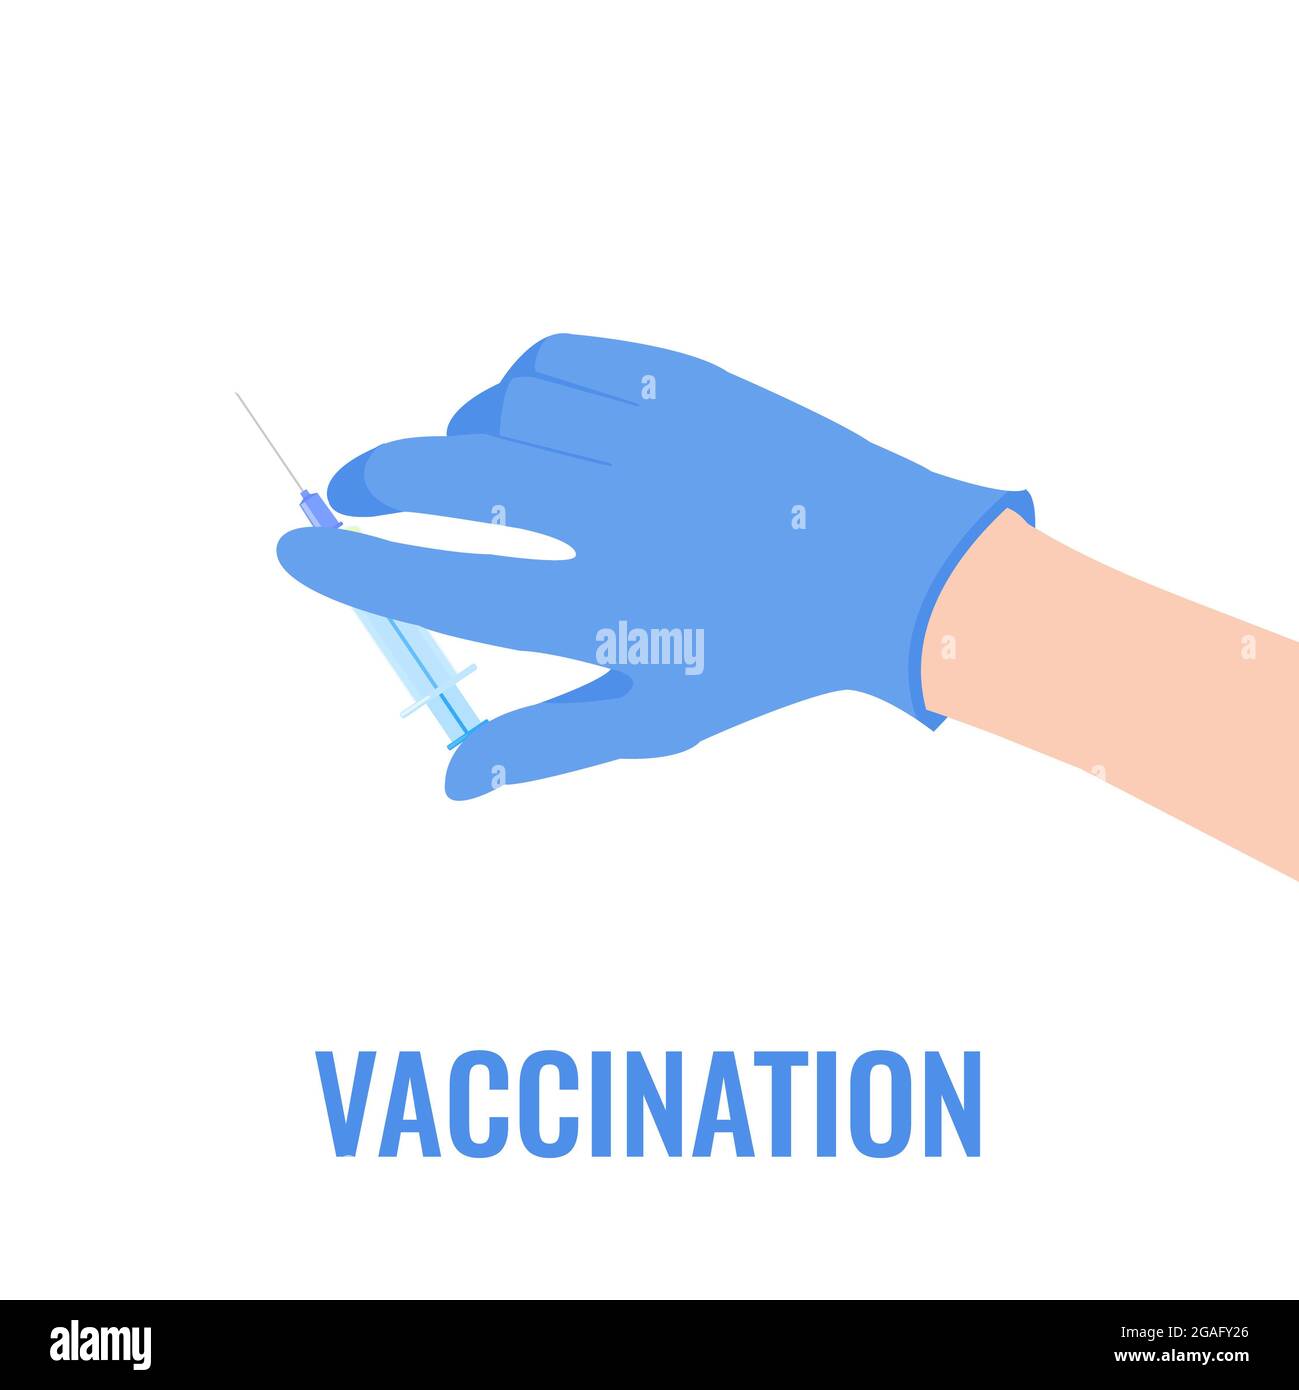 Vaccination, conceptual illustration Stock Photo